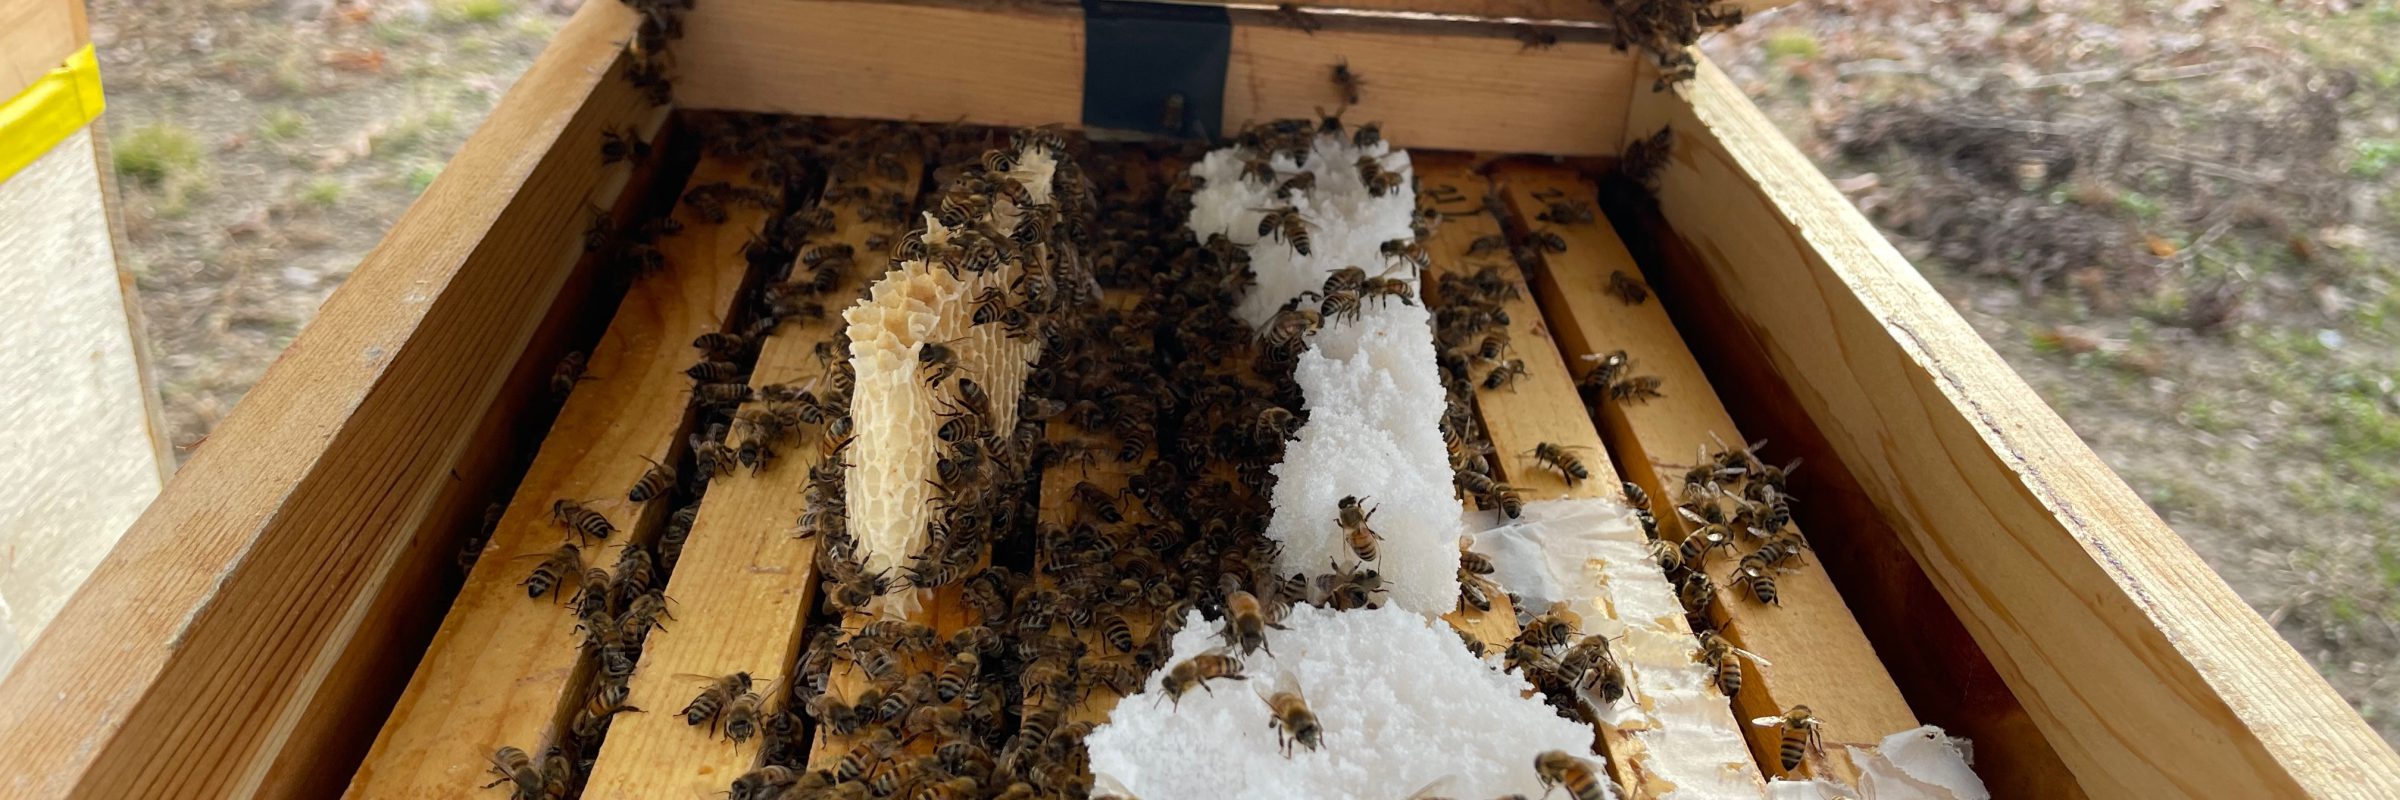 Feeding Bees in Winter